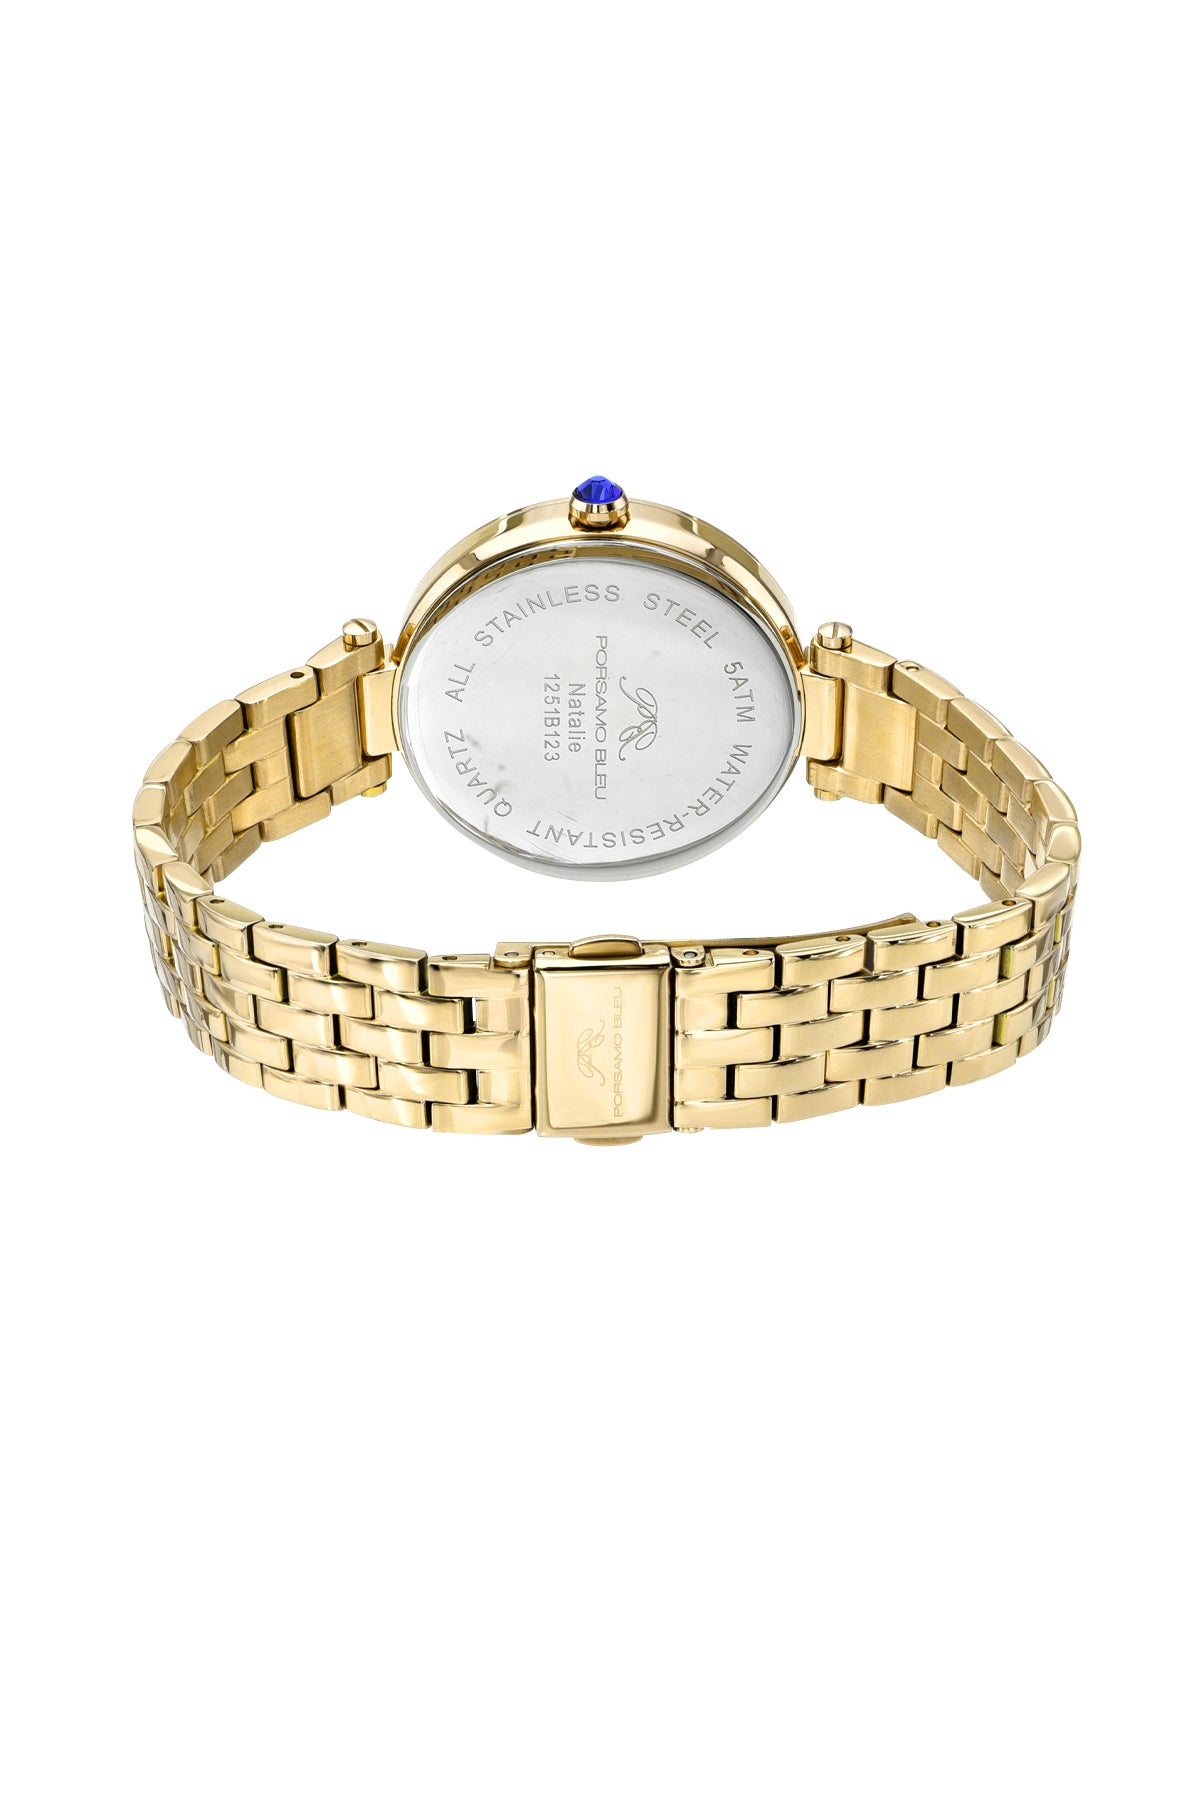 Porsamo Bleu Natalie Luxury Women's Stainless Steel Watch, With White Guilloche Dial, Gold, 1251BNAS